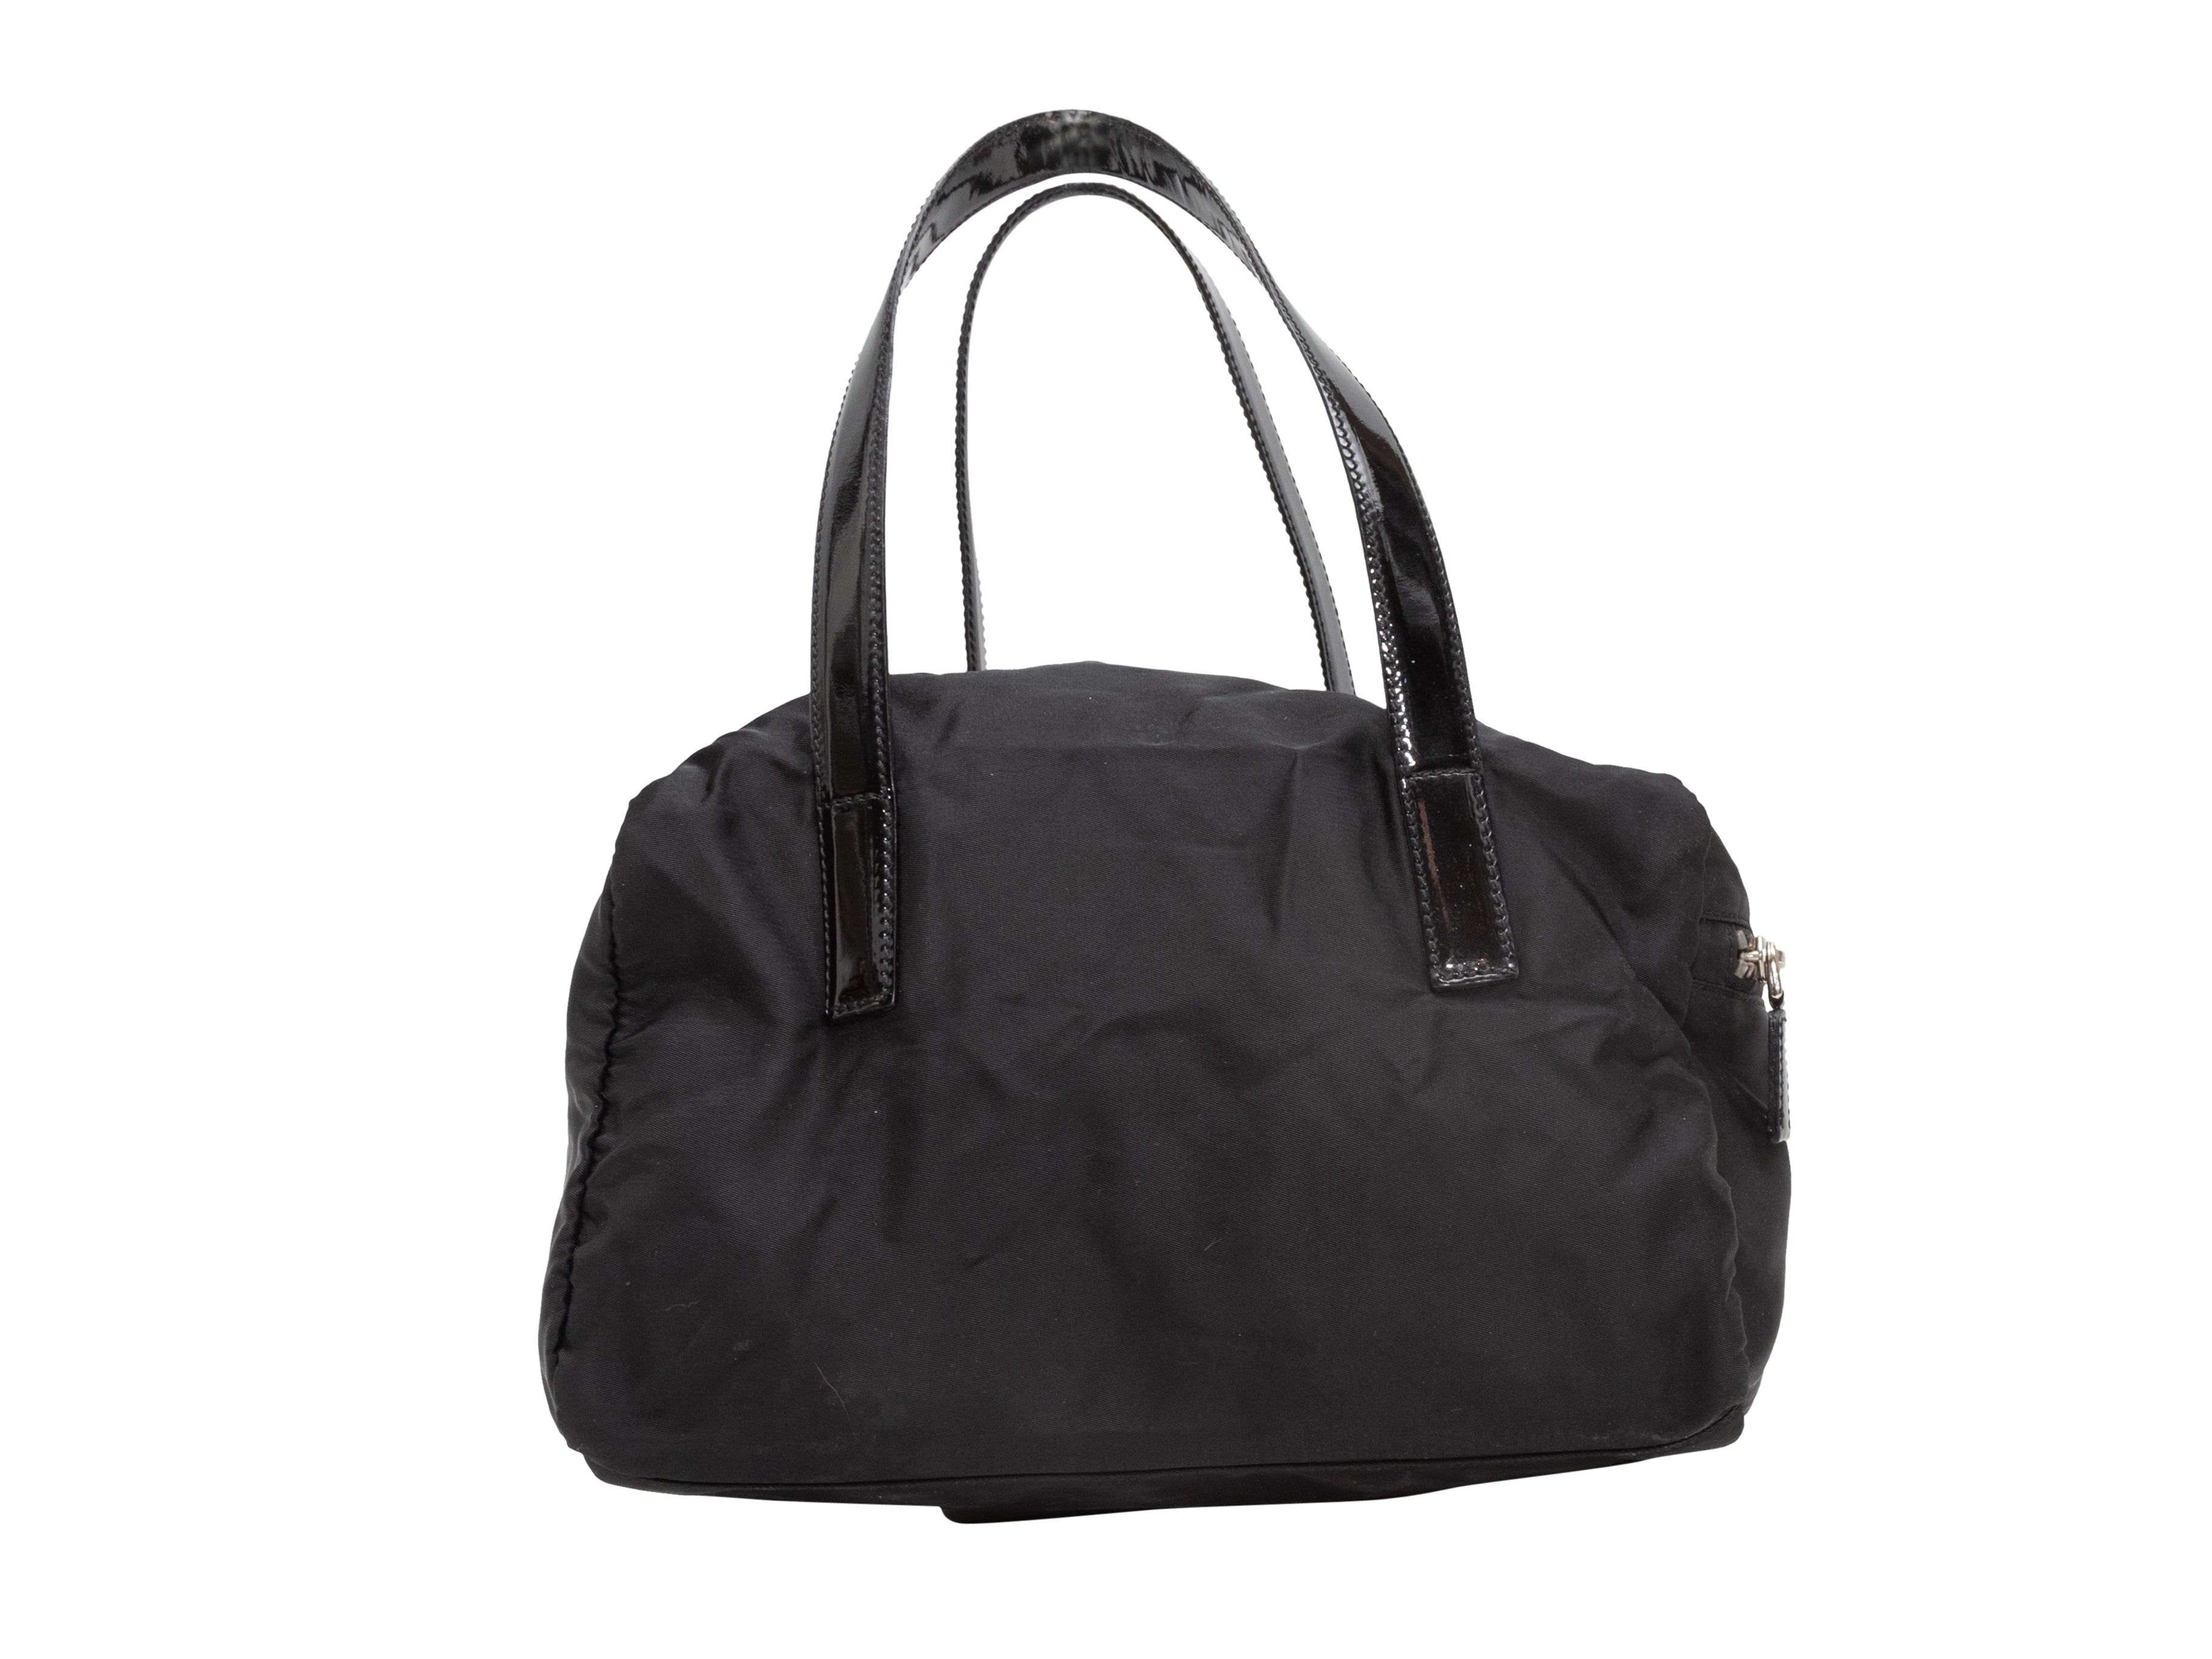 Luxury handbag - Balenciaga tote bag in black nylon